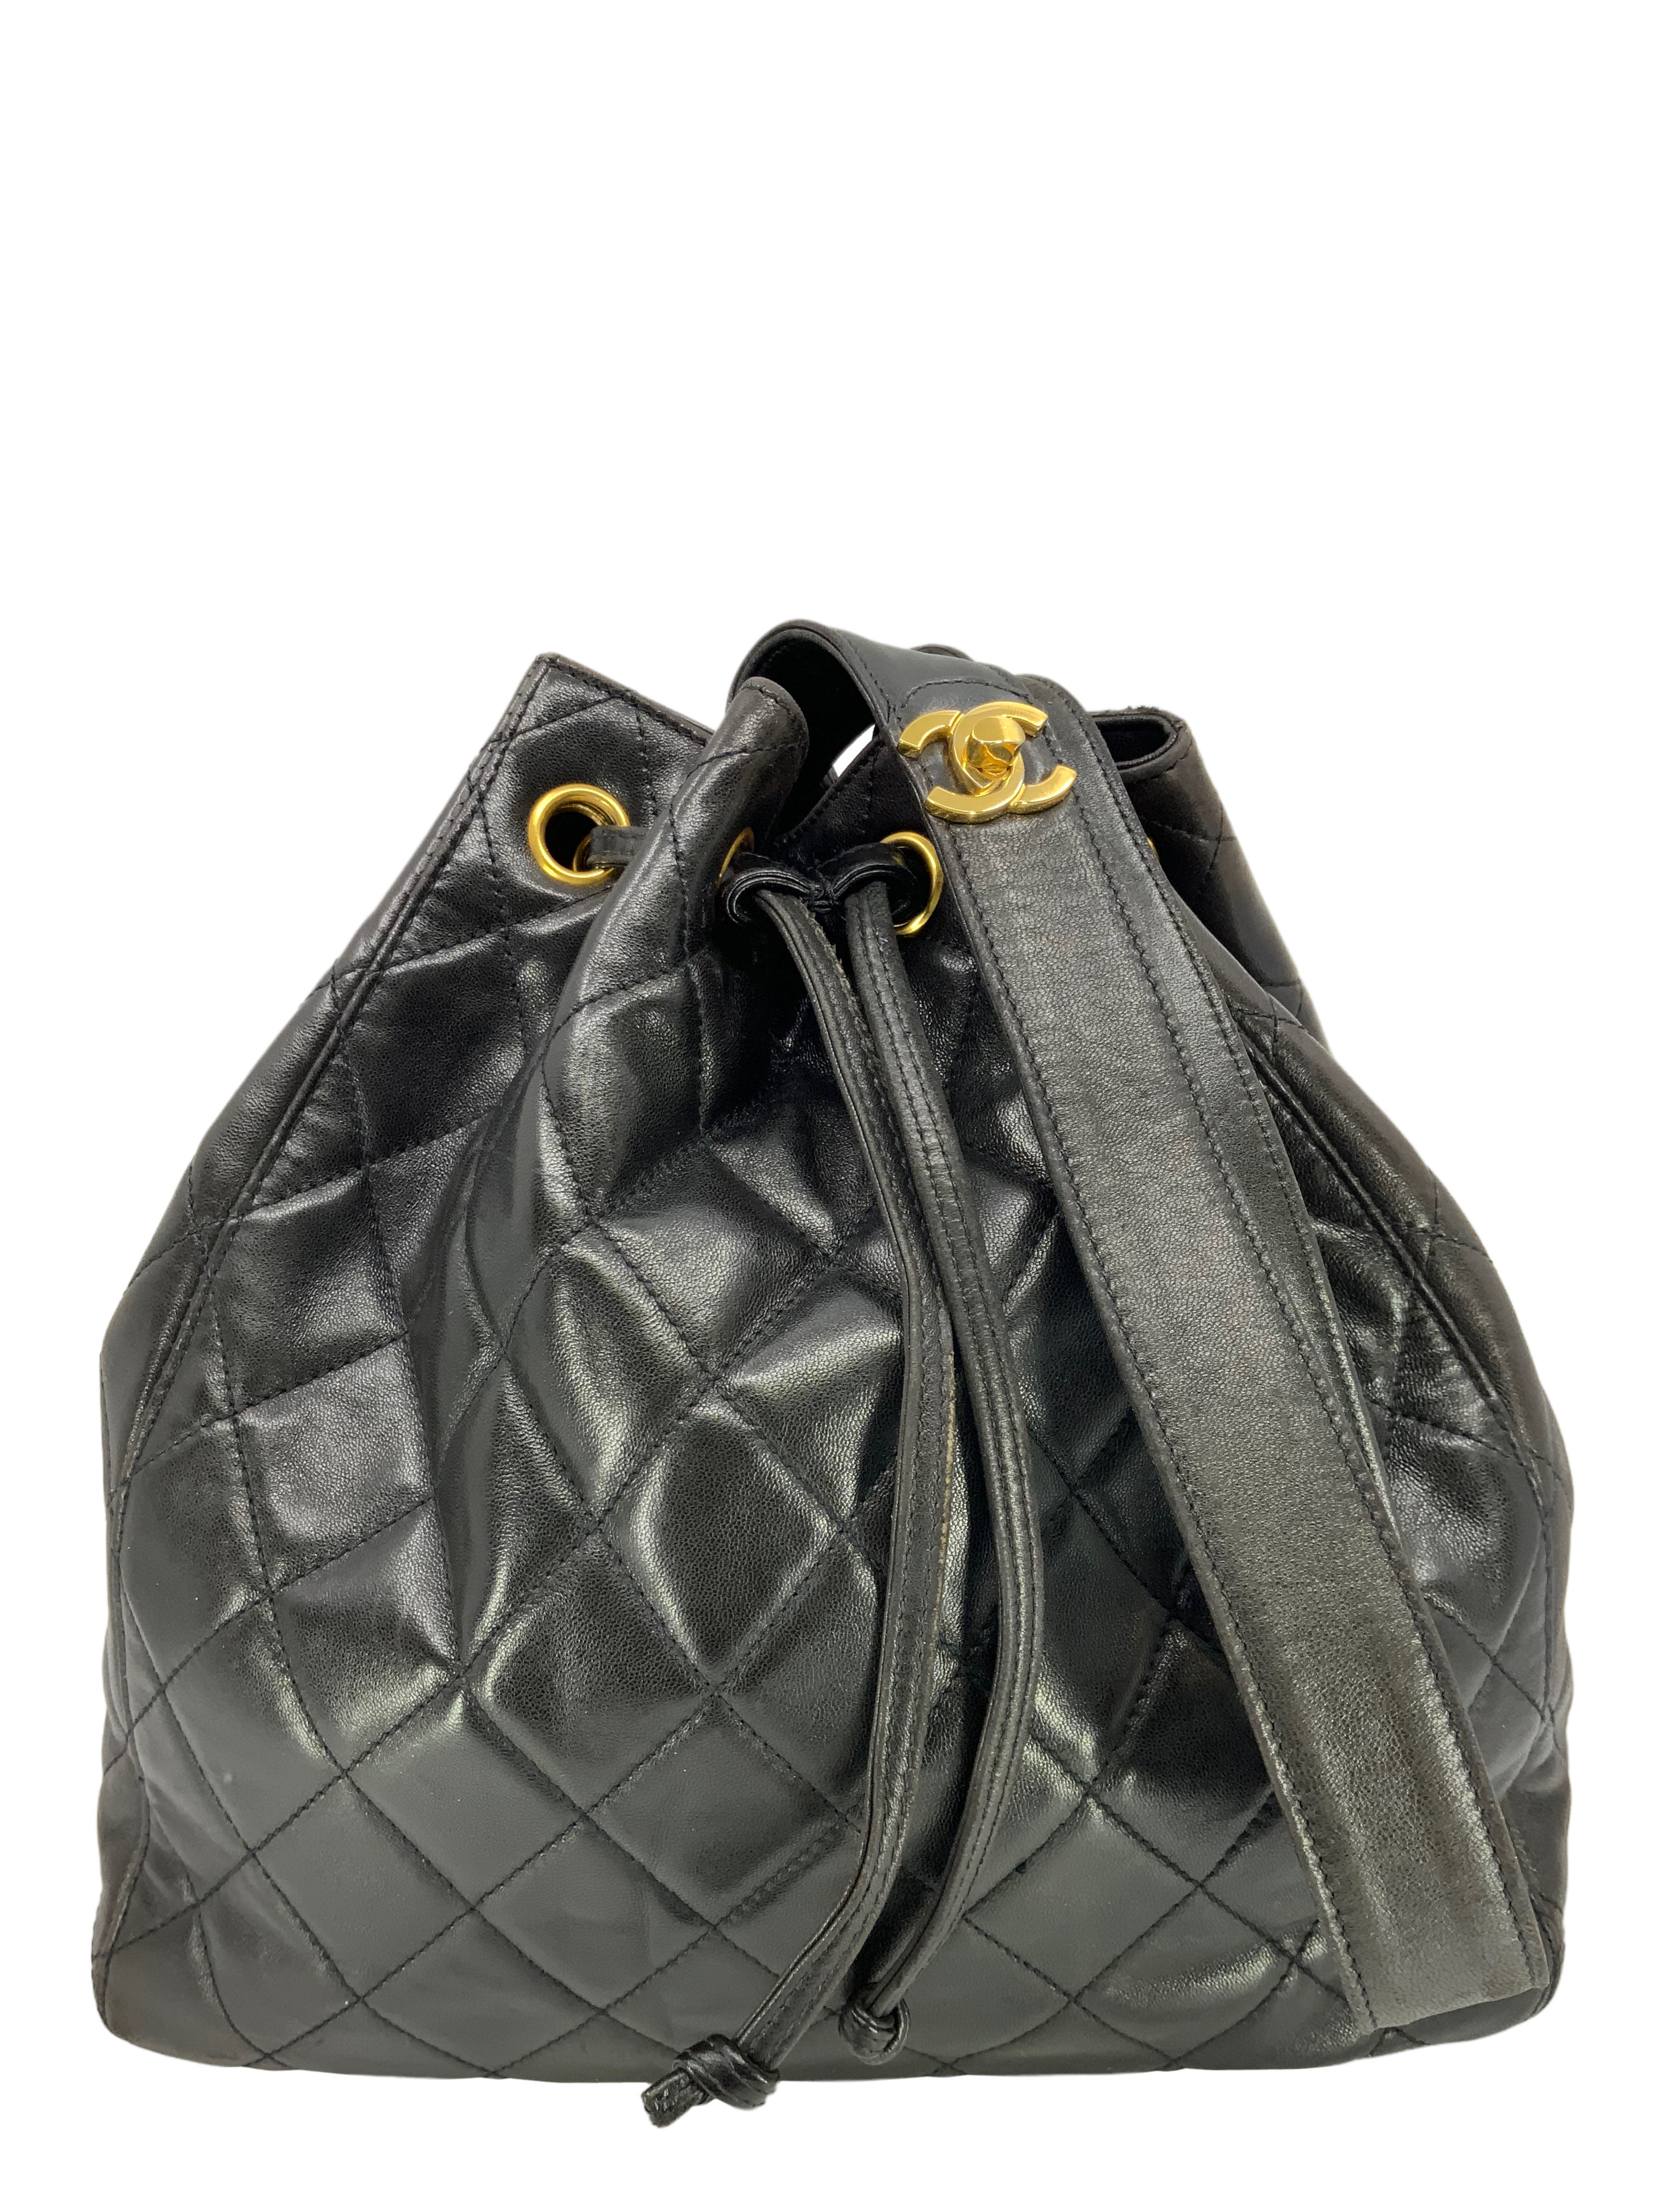 Chanel CC Chain Drawstring Bucket Bag Quilted Lambskin Mini Black